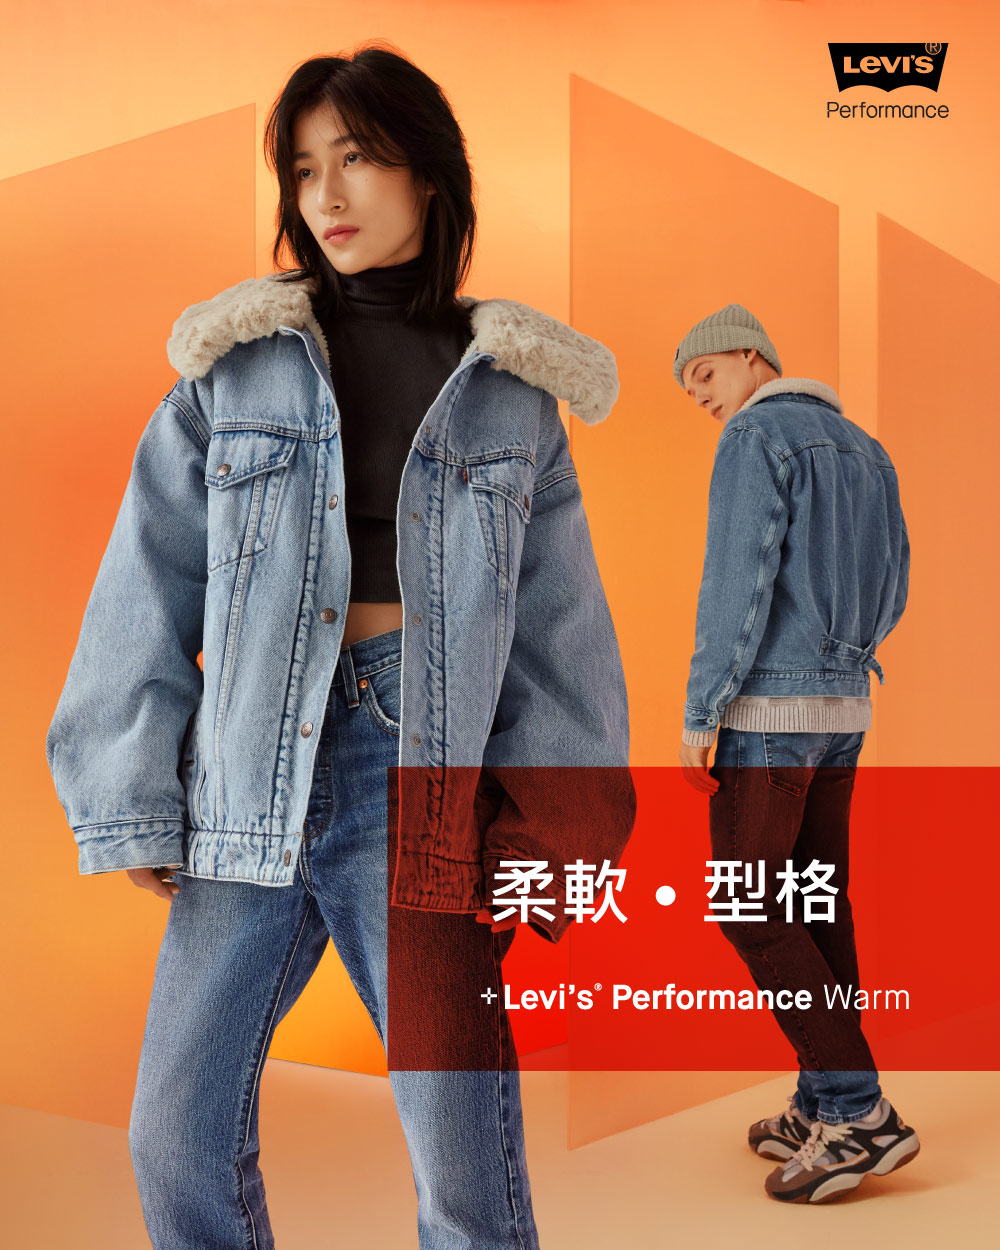 身穿 Levi's Performance Warm 牛仔外套的兩位模特兒 - Levi's Hong Kong